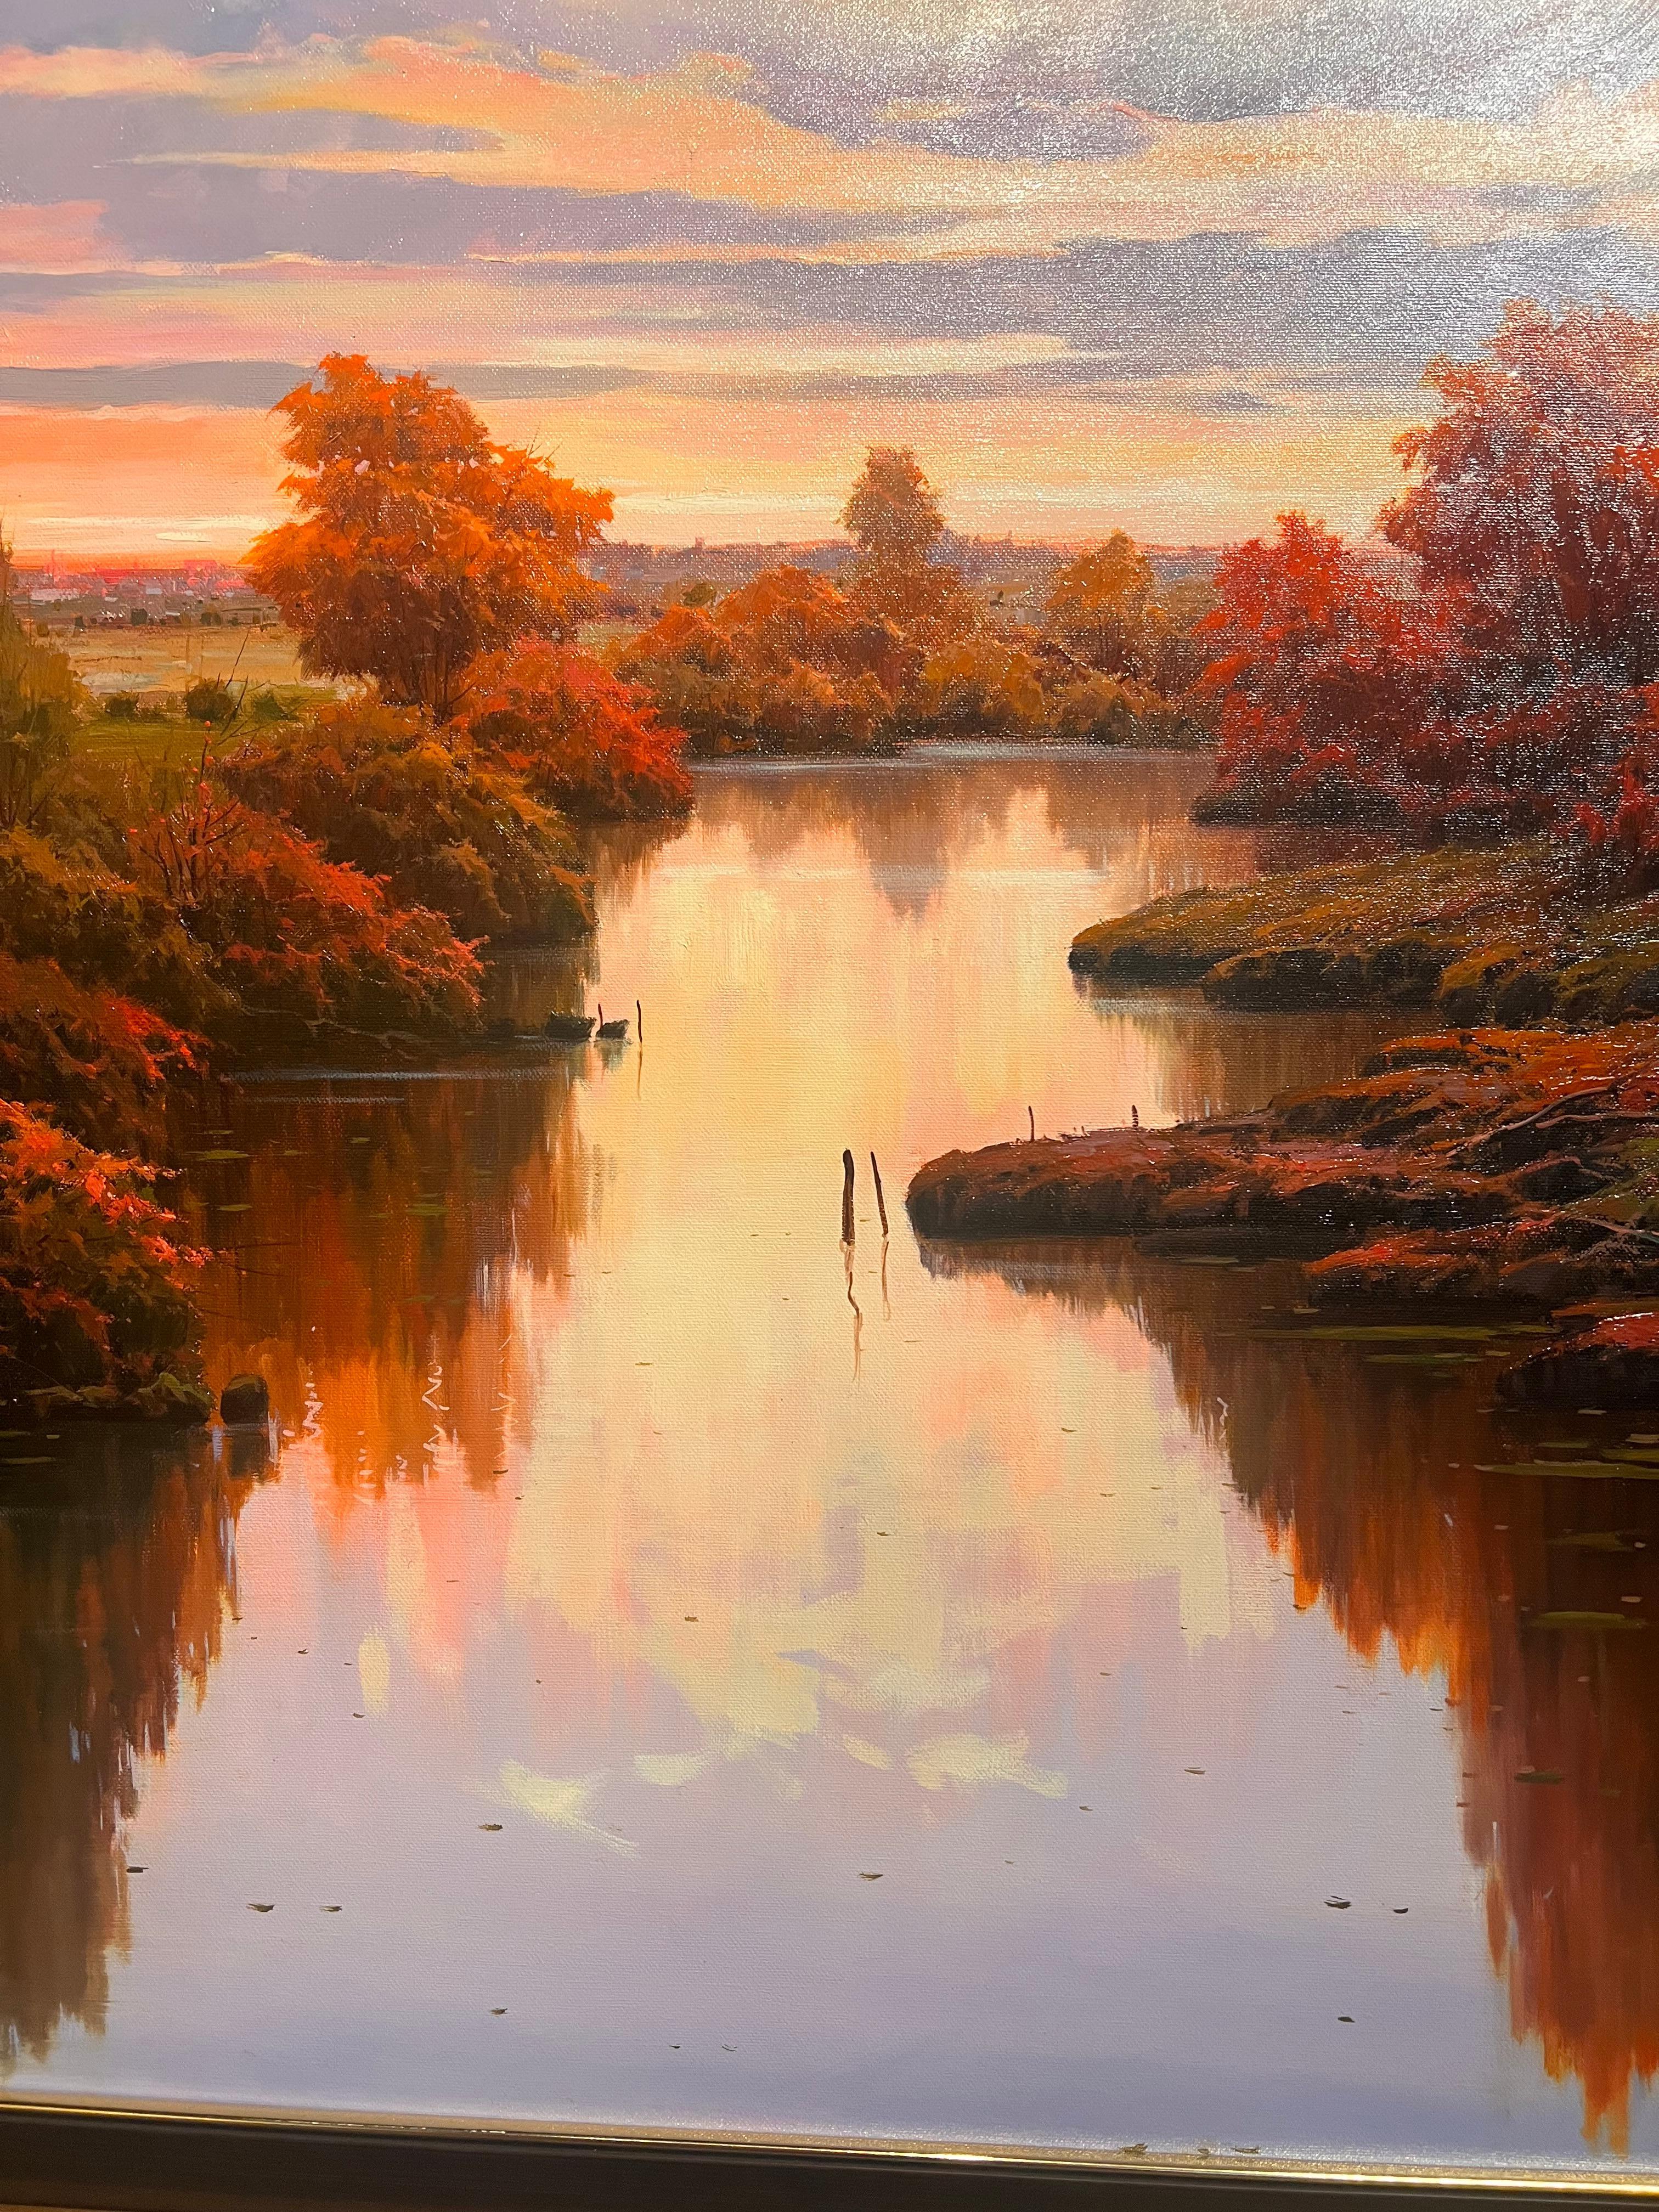 Atardecer (Sunset) - Painting by Miguel Peidro